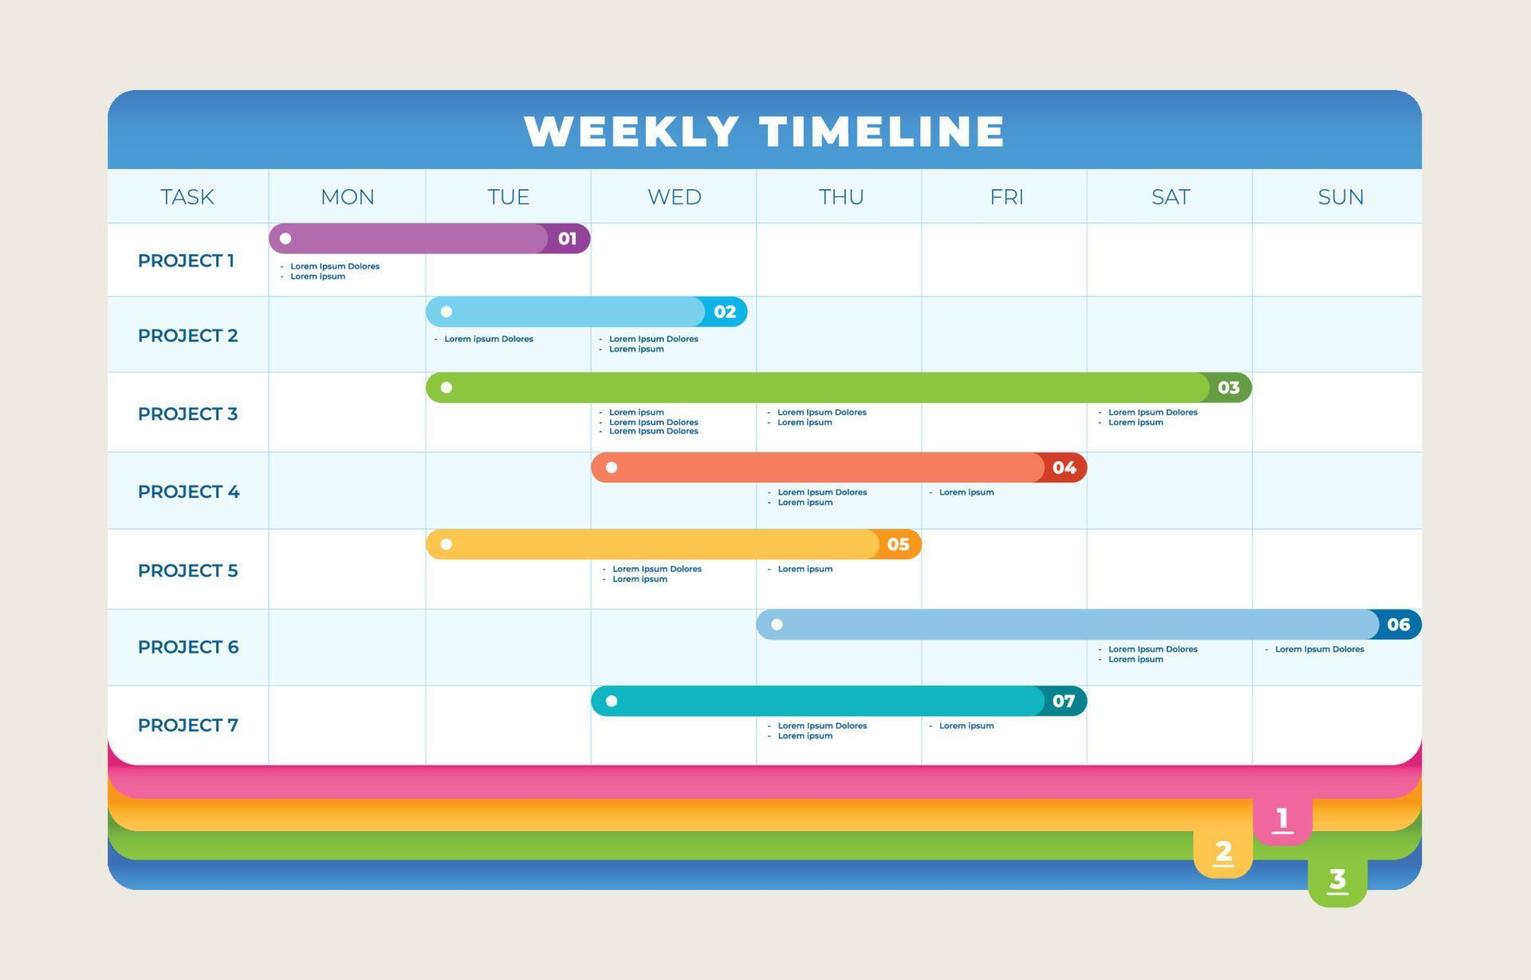 Weekly Timeline Journal Template vector